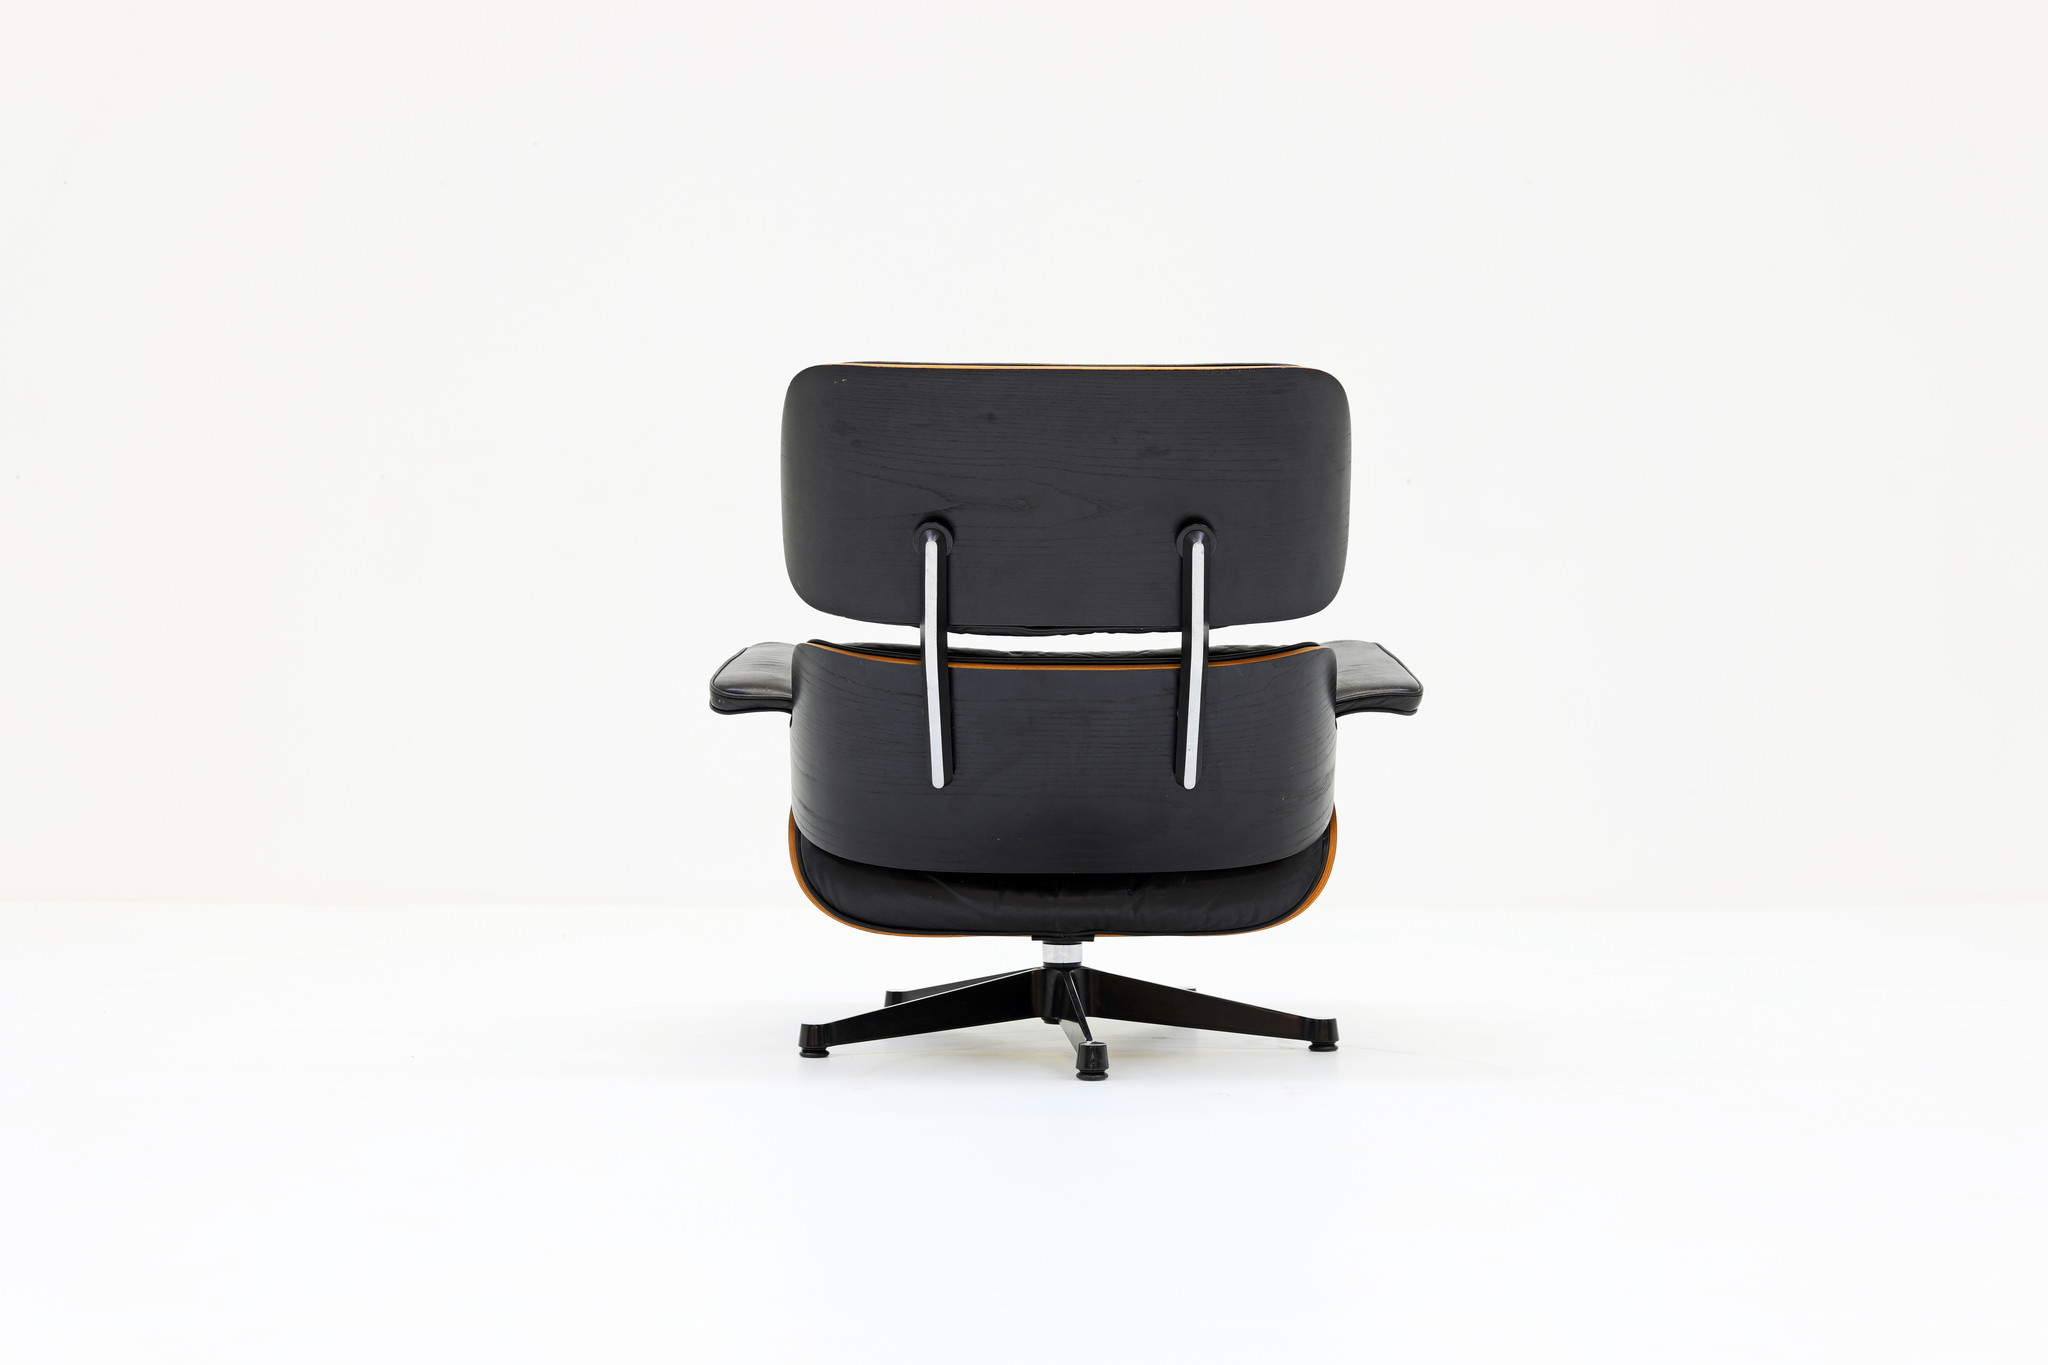 Eames Lounge chair "Herman Miller"